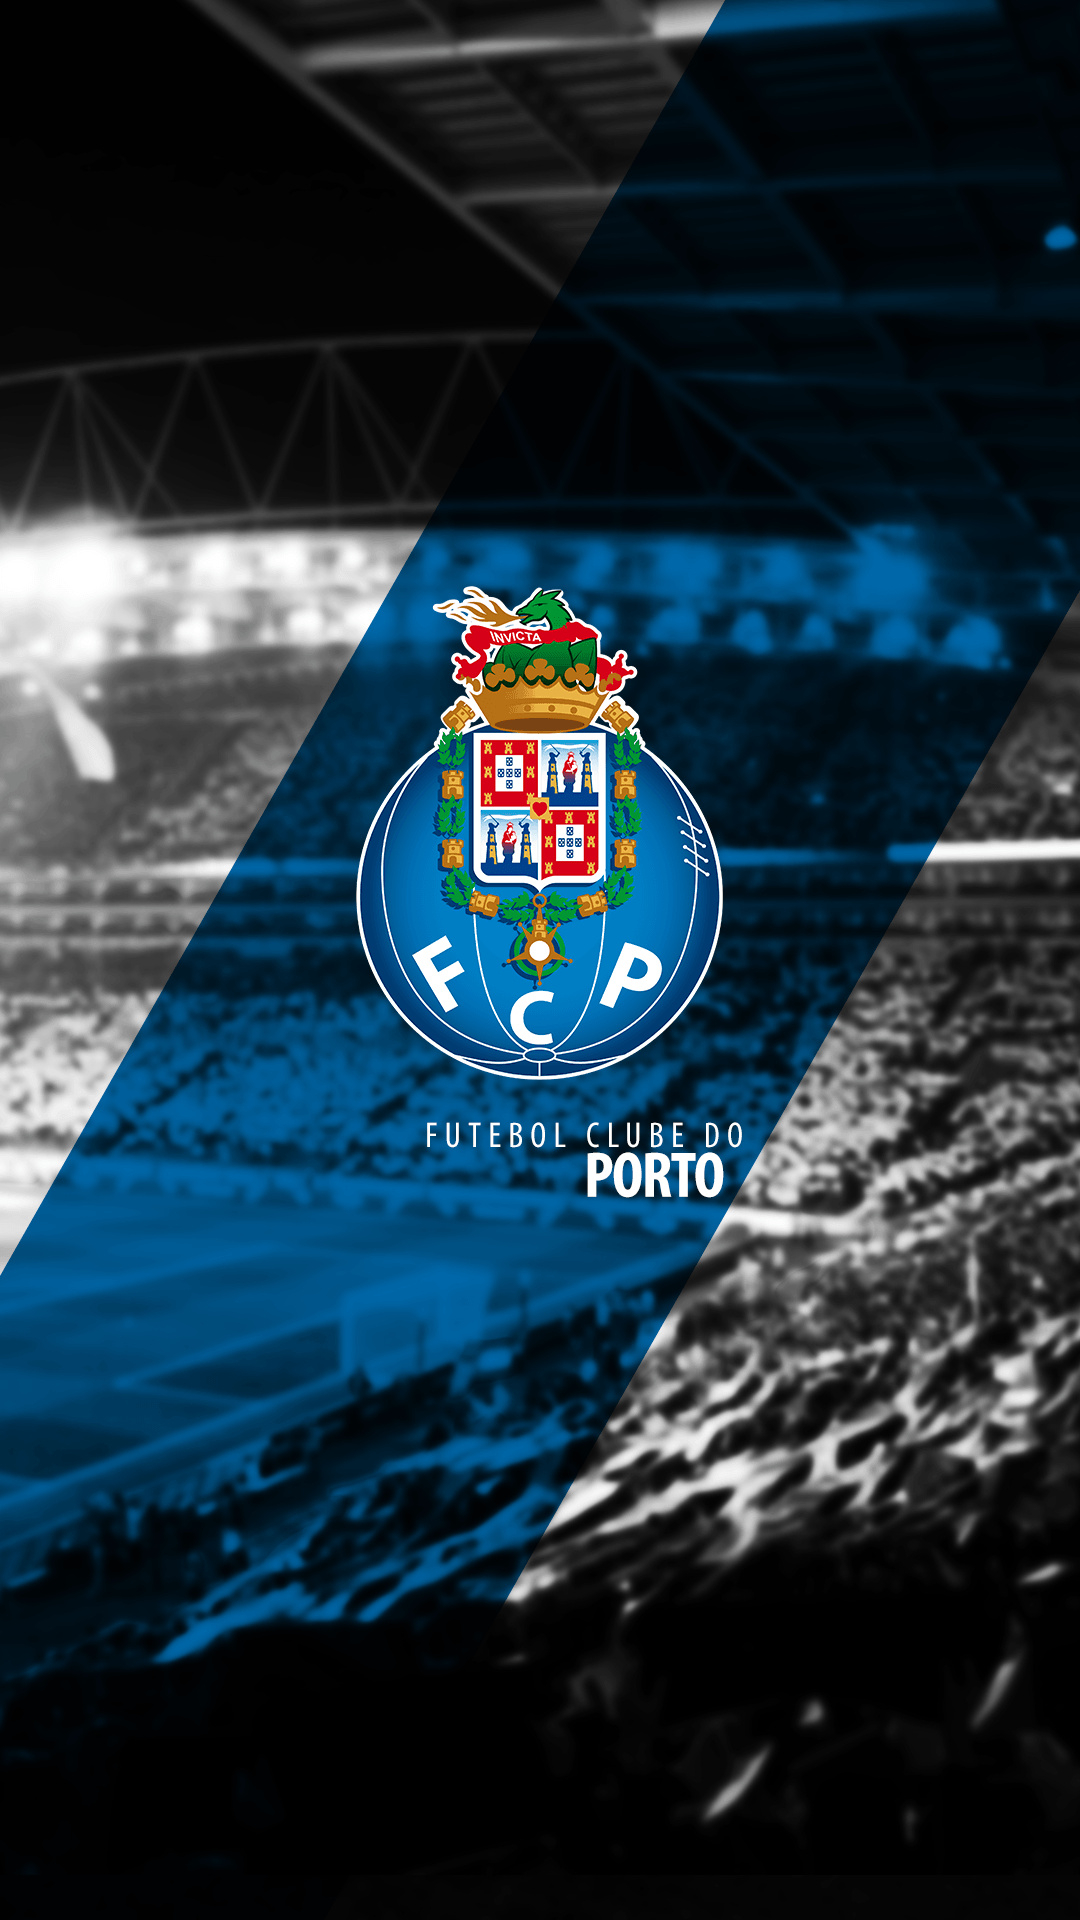 FC Porto: An inaugural member of the first Portuguese league. 1080x1920 Full HD Wallpaper.